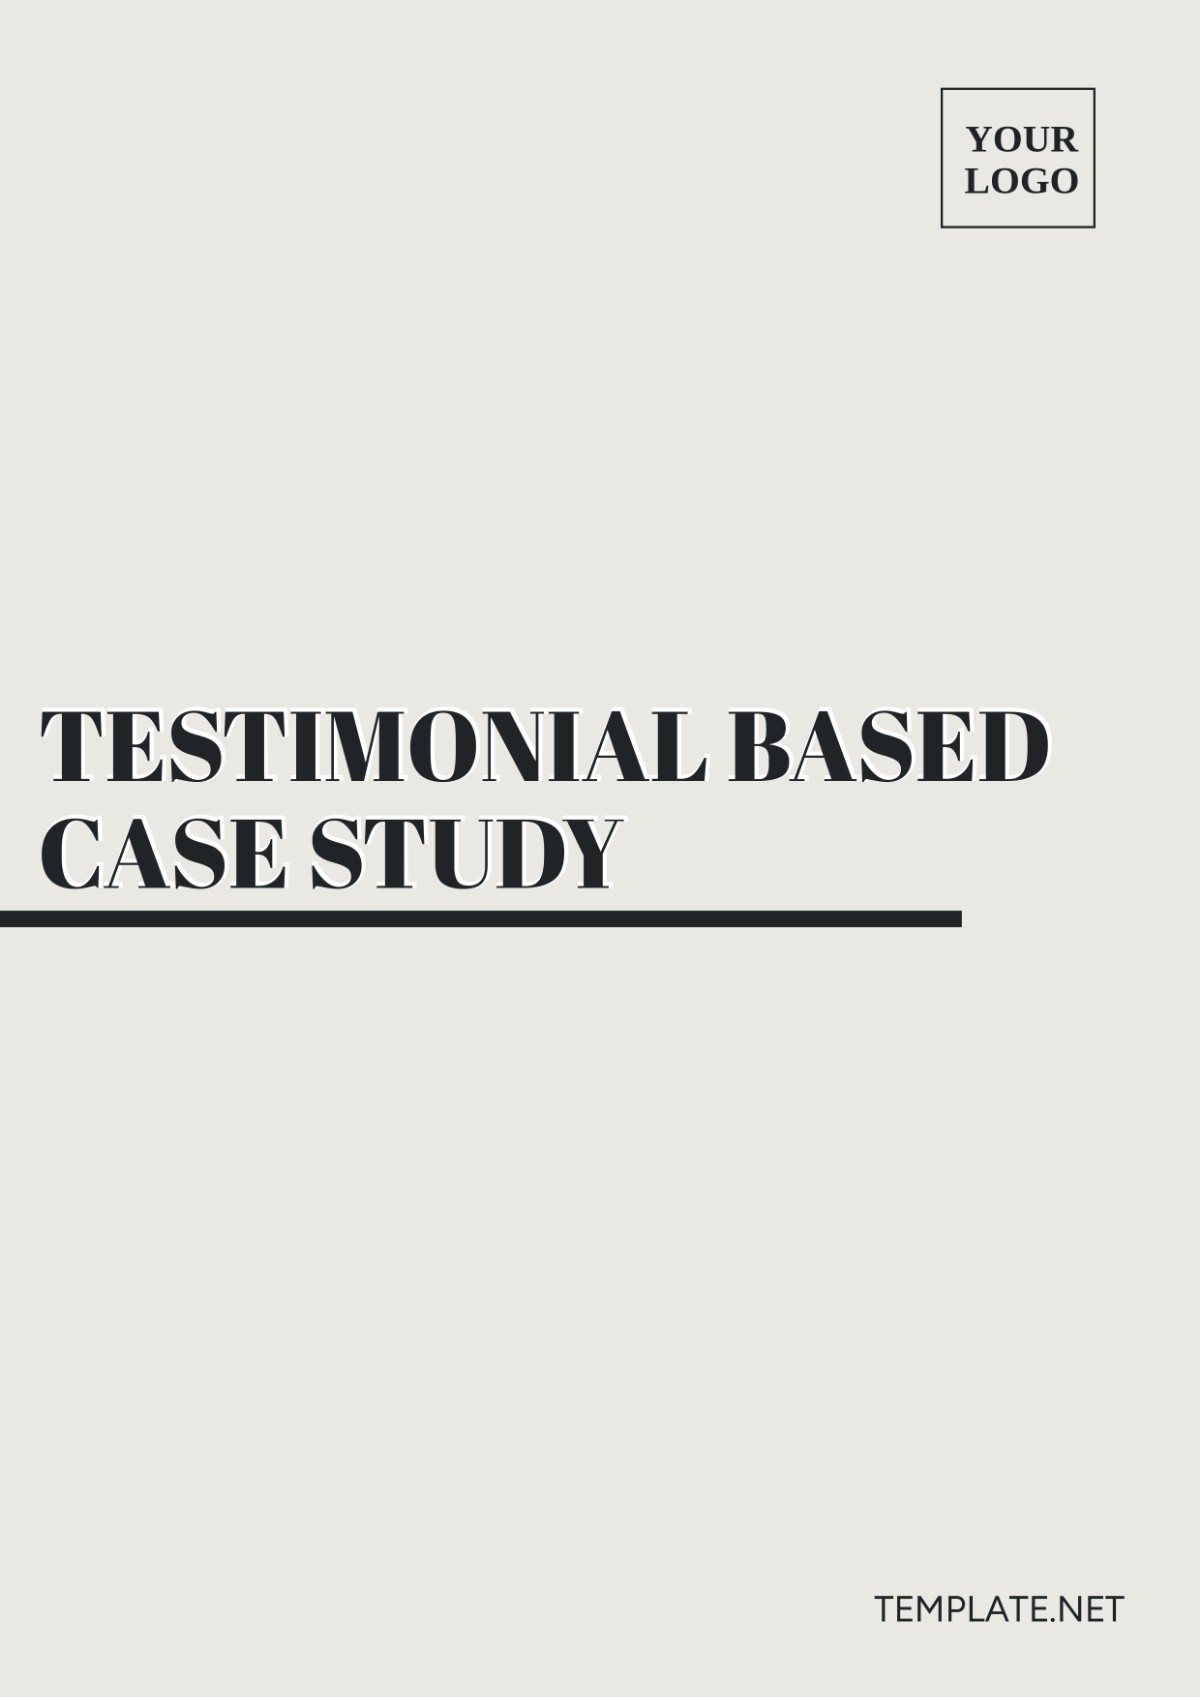 Free Testimonial Based Case Study Template